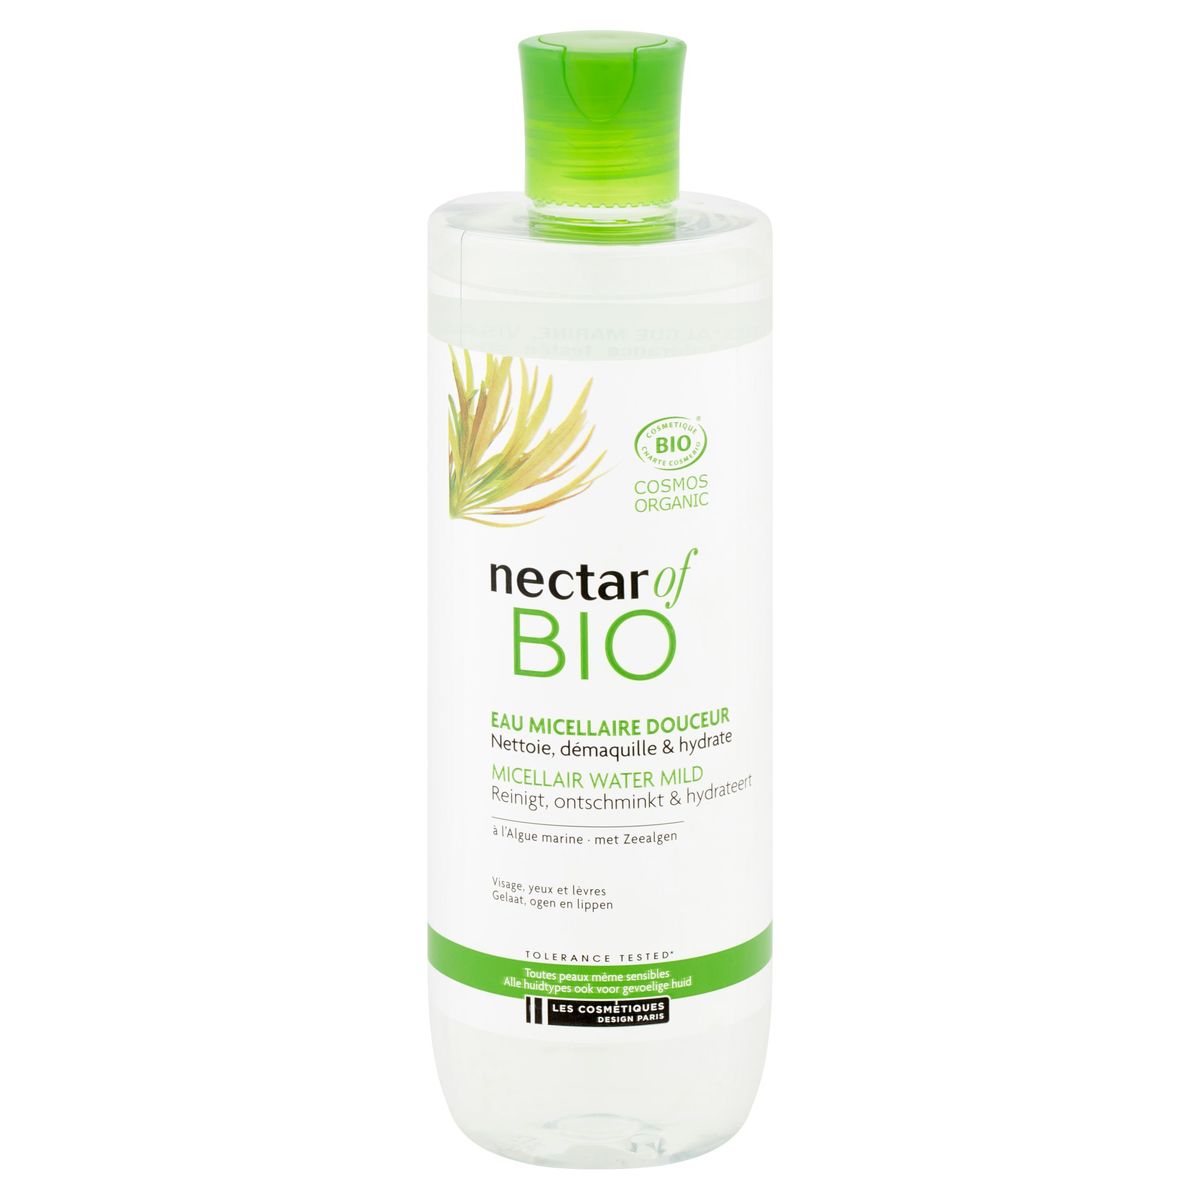 Nectar of Bio Micellair Water Mild 400 ml